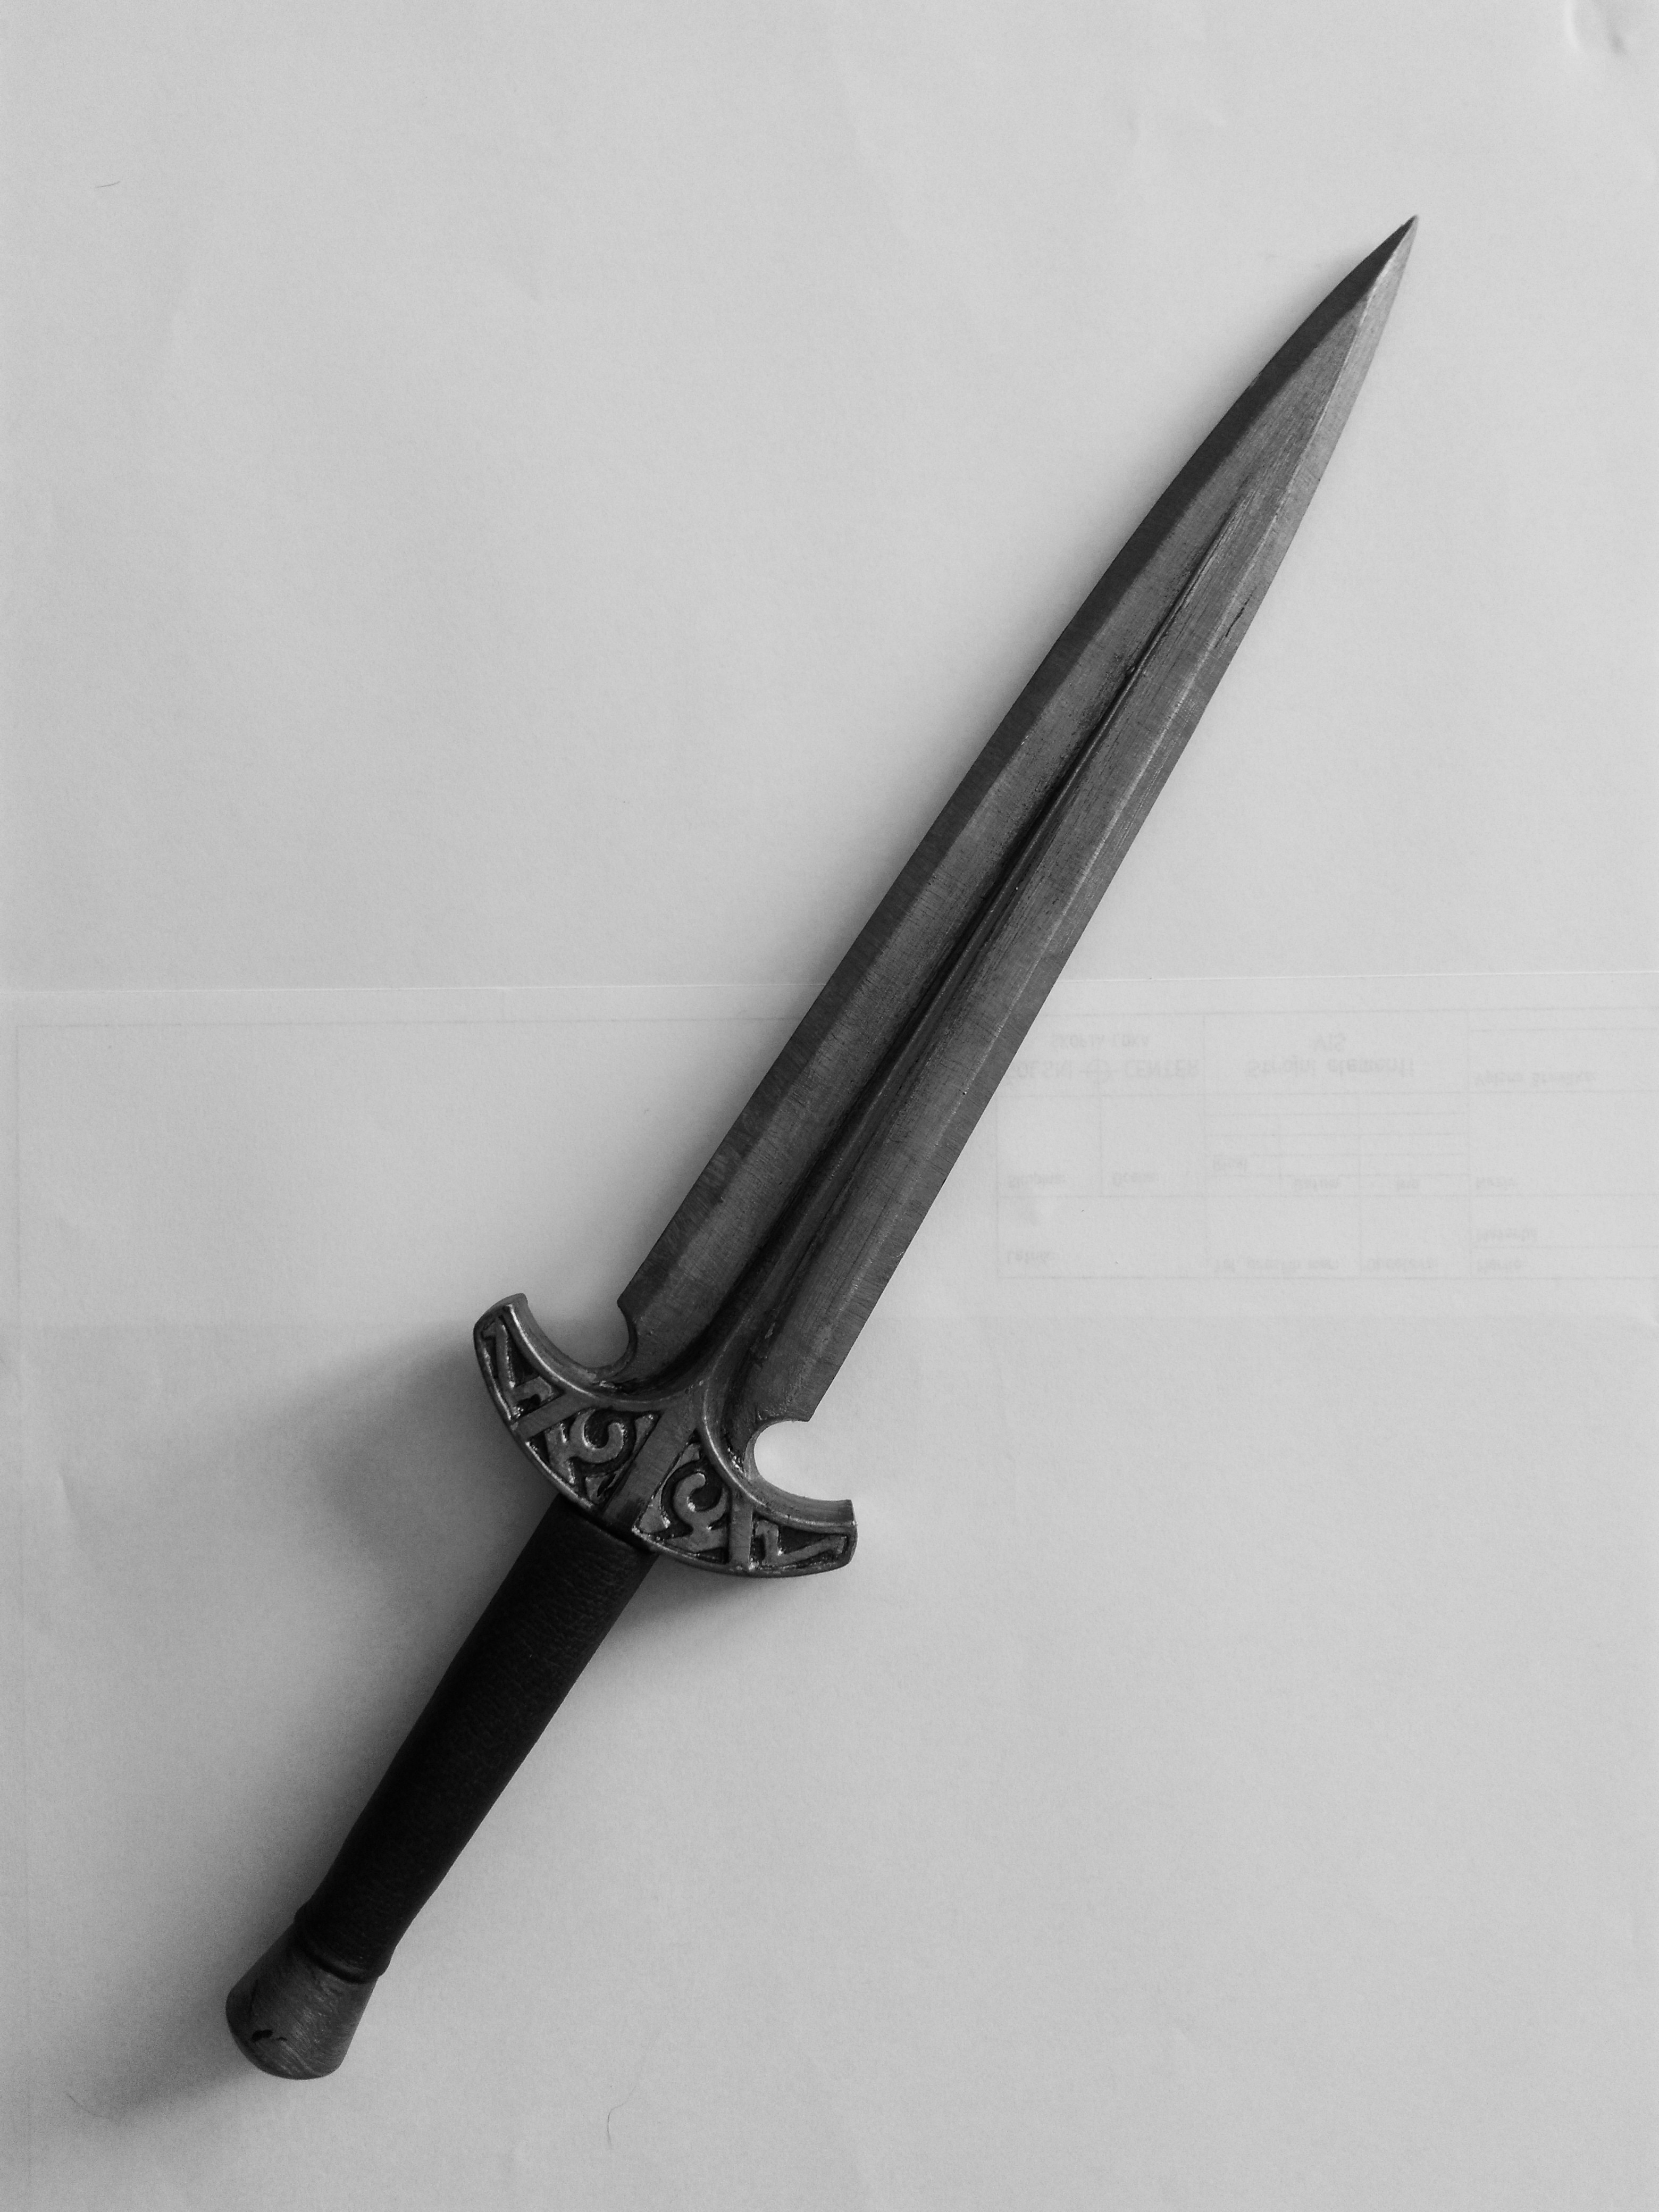 Steel dagger inspired by Skyrim